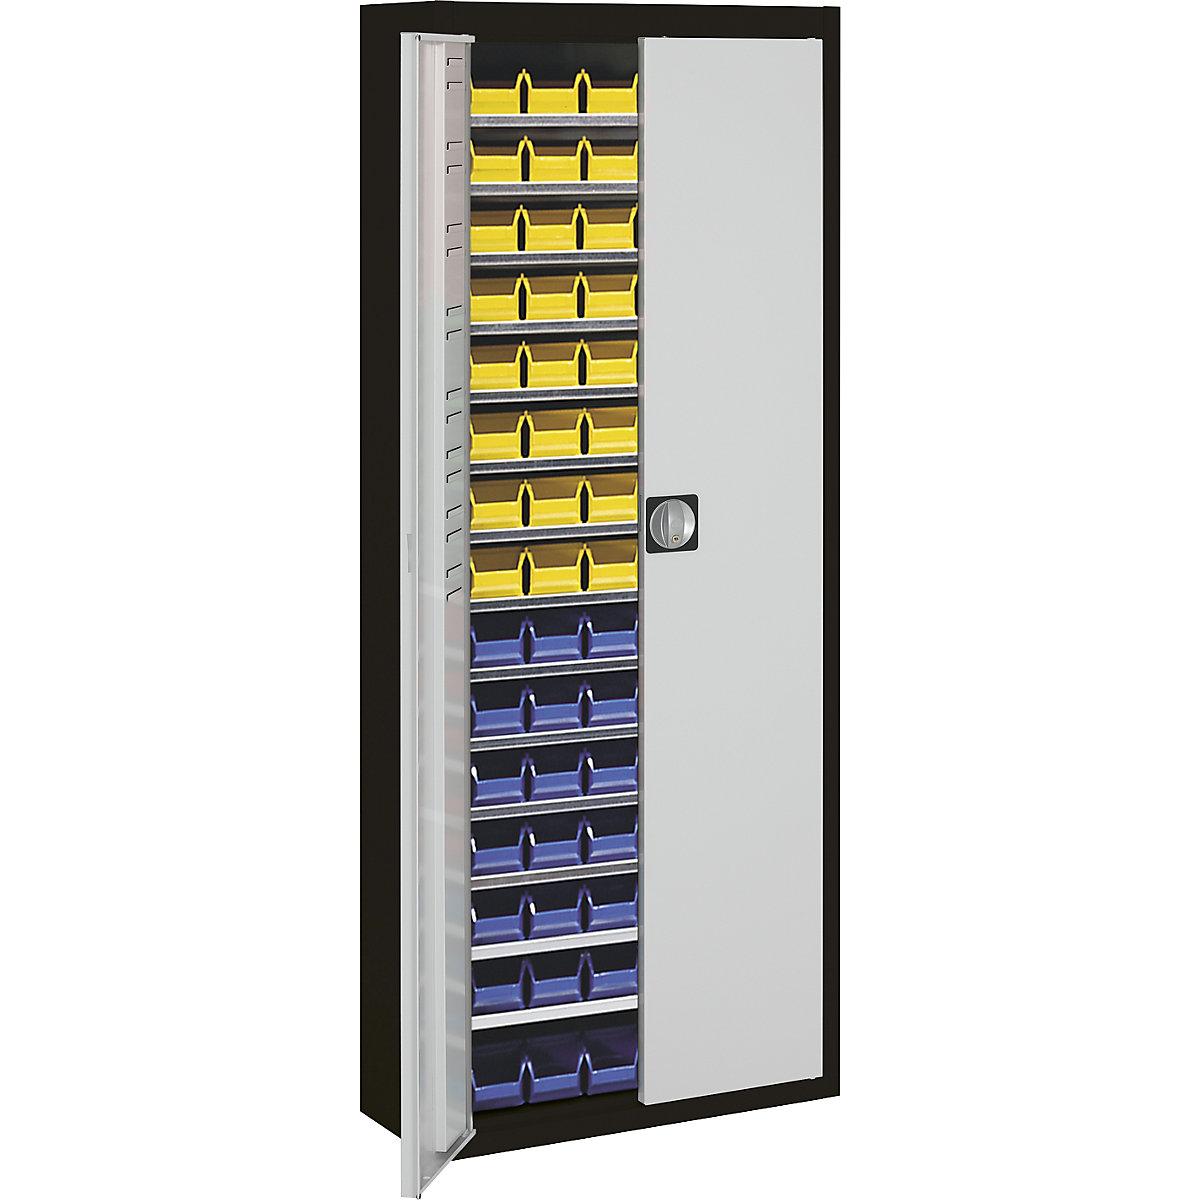 Storage cupboard with open fronted storage bins – mauser, HxWxD 1740 x 680 x 280 mm, two-colour, black body, grey doors, 90 bins-8